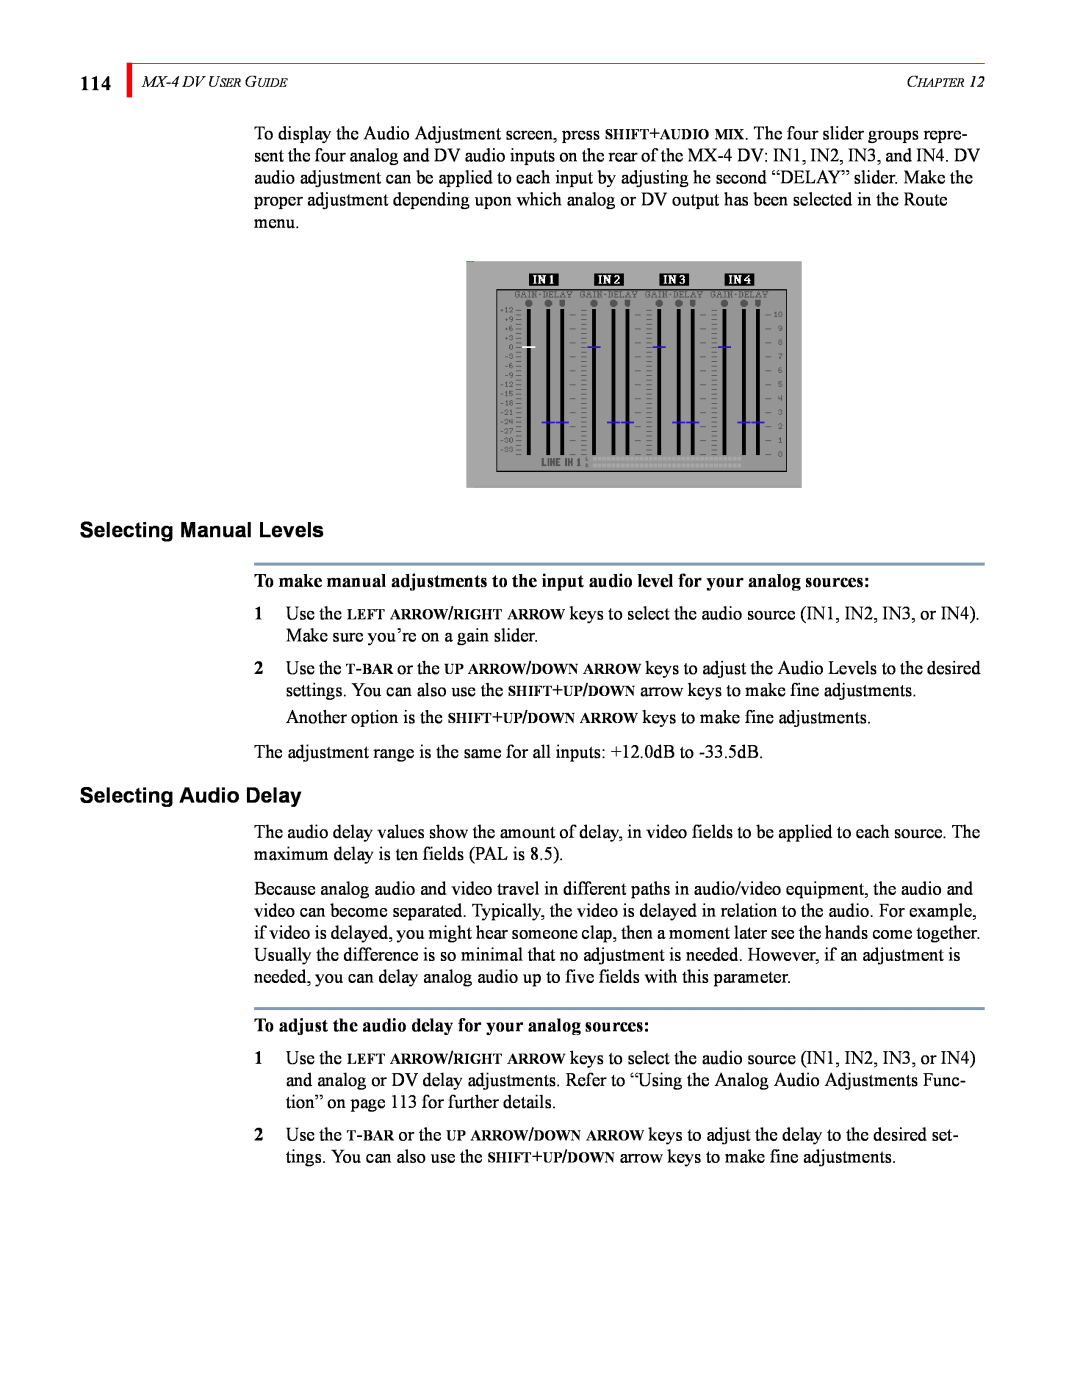 FOCUS Enhancements MX-4DV manual Selecting Manual Levels, Selecting Audio Delay 